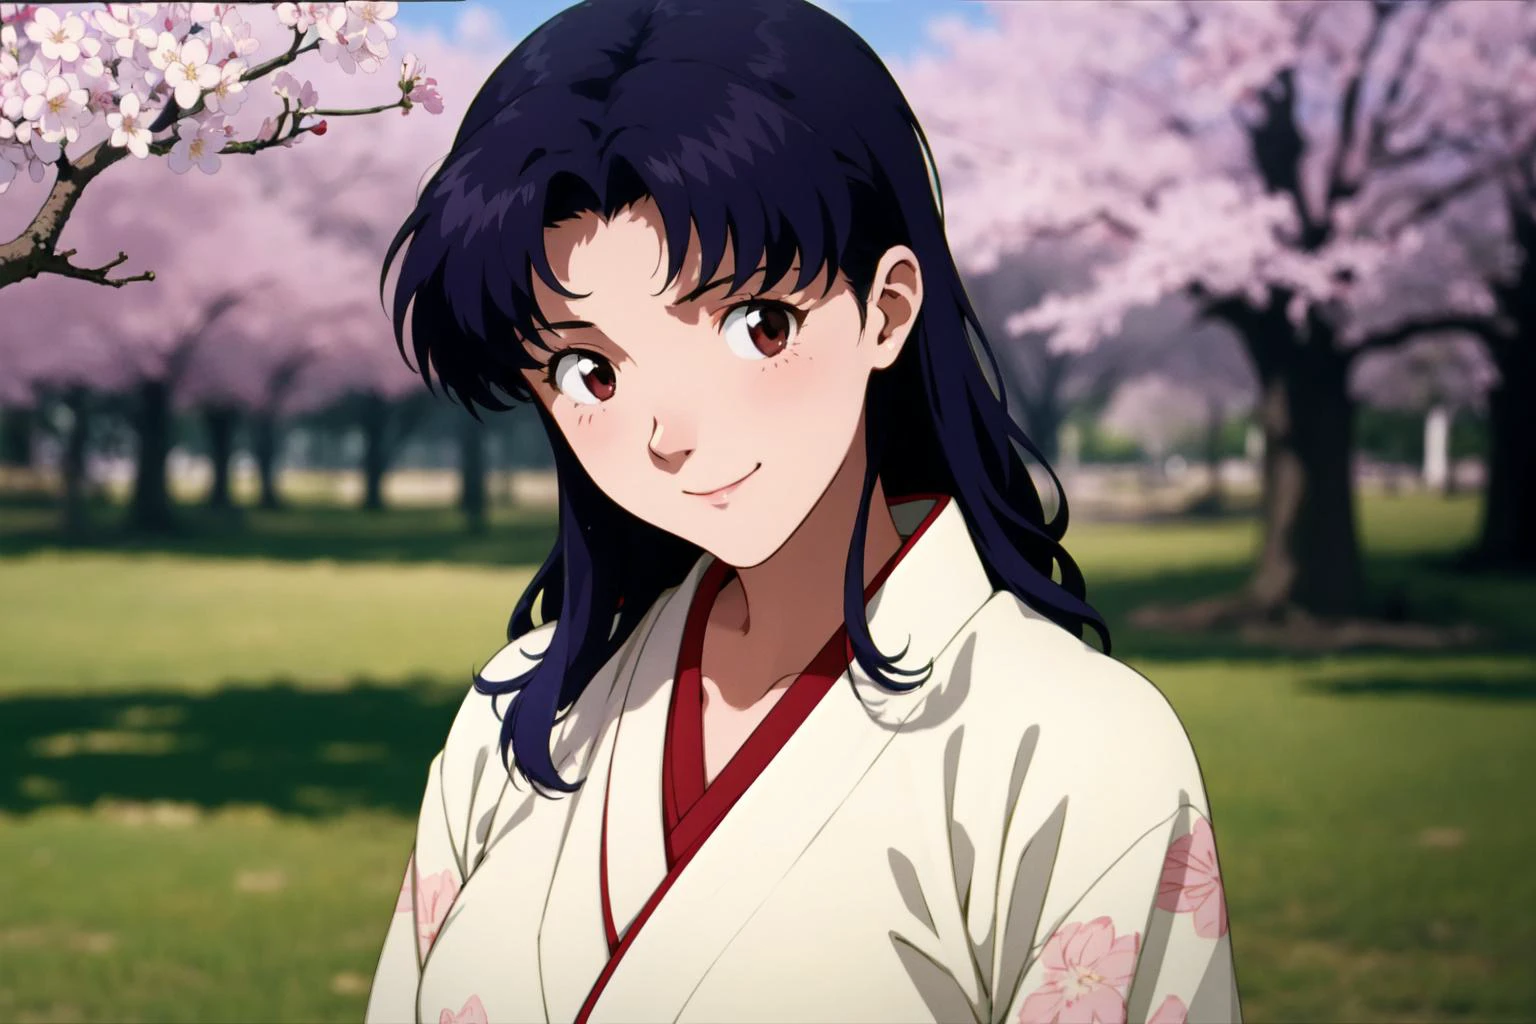 (RAW写真, 最高品質), 1人の女の子,  自然光, 一人で, 軽い笑顔, 
katsuragi misato,  屋外,
春, 桜の花, 美しい着物, 上半身,